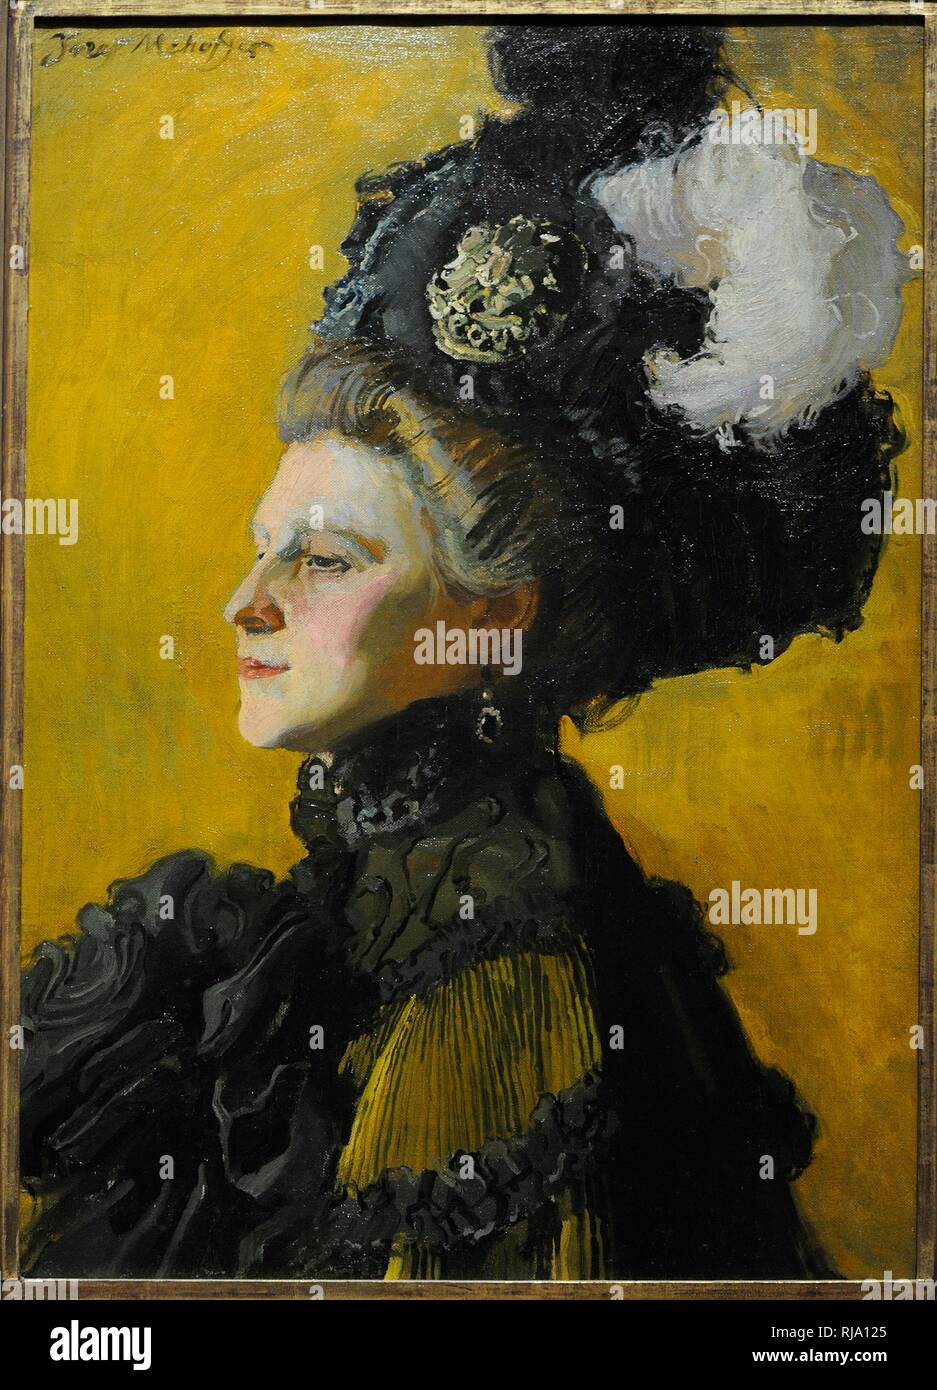 Józef Mehoffer (1869-1946). Pintor polaco. Retrato de la mujer del artista Jadwiga sobre un fondo amarillo, 1907. Museo Nacional de Varsovia. Polonia. Stock Photo